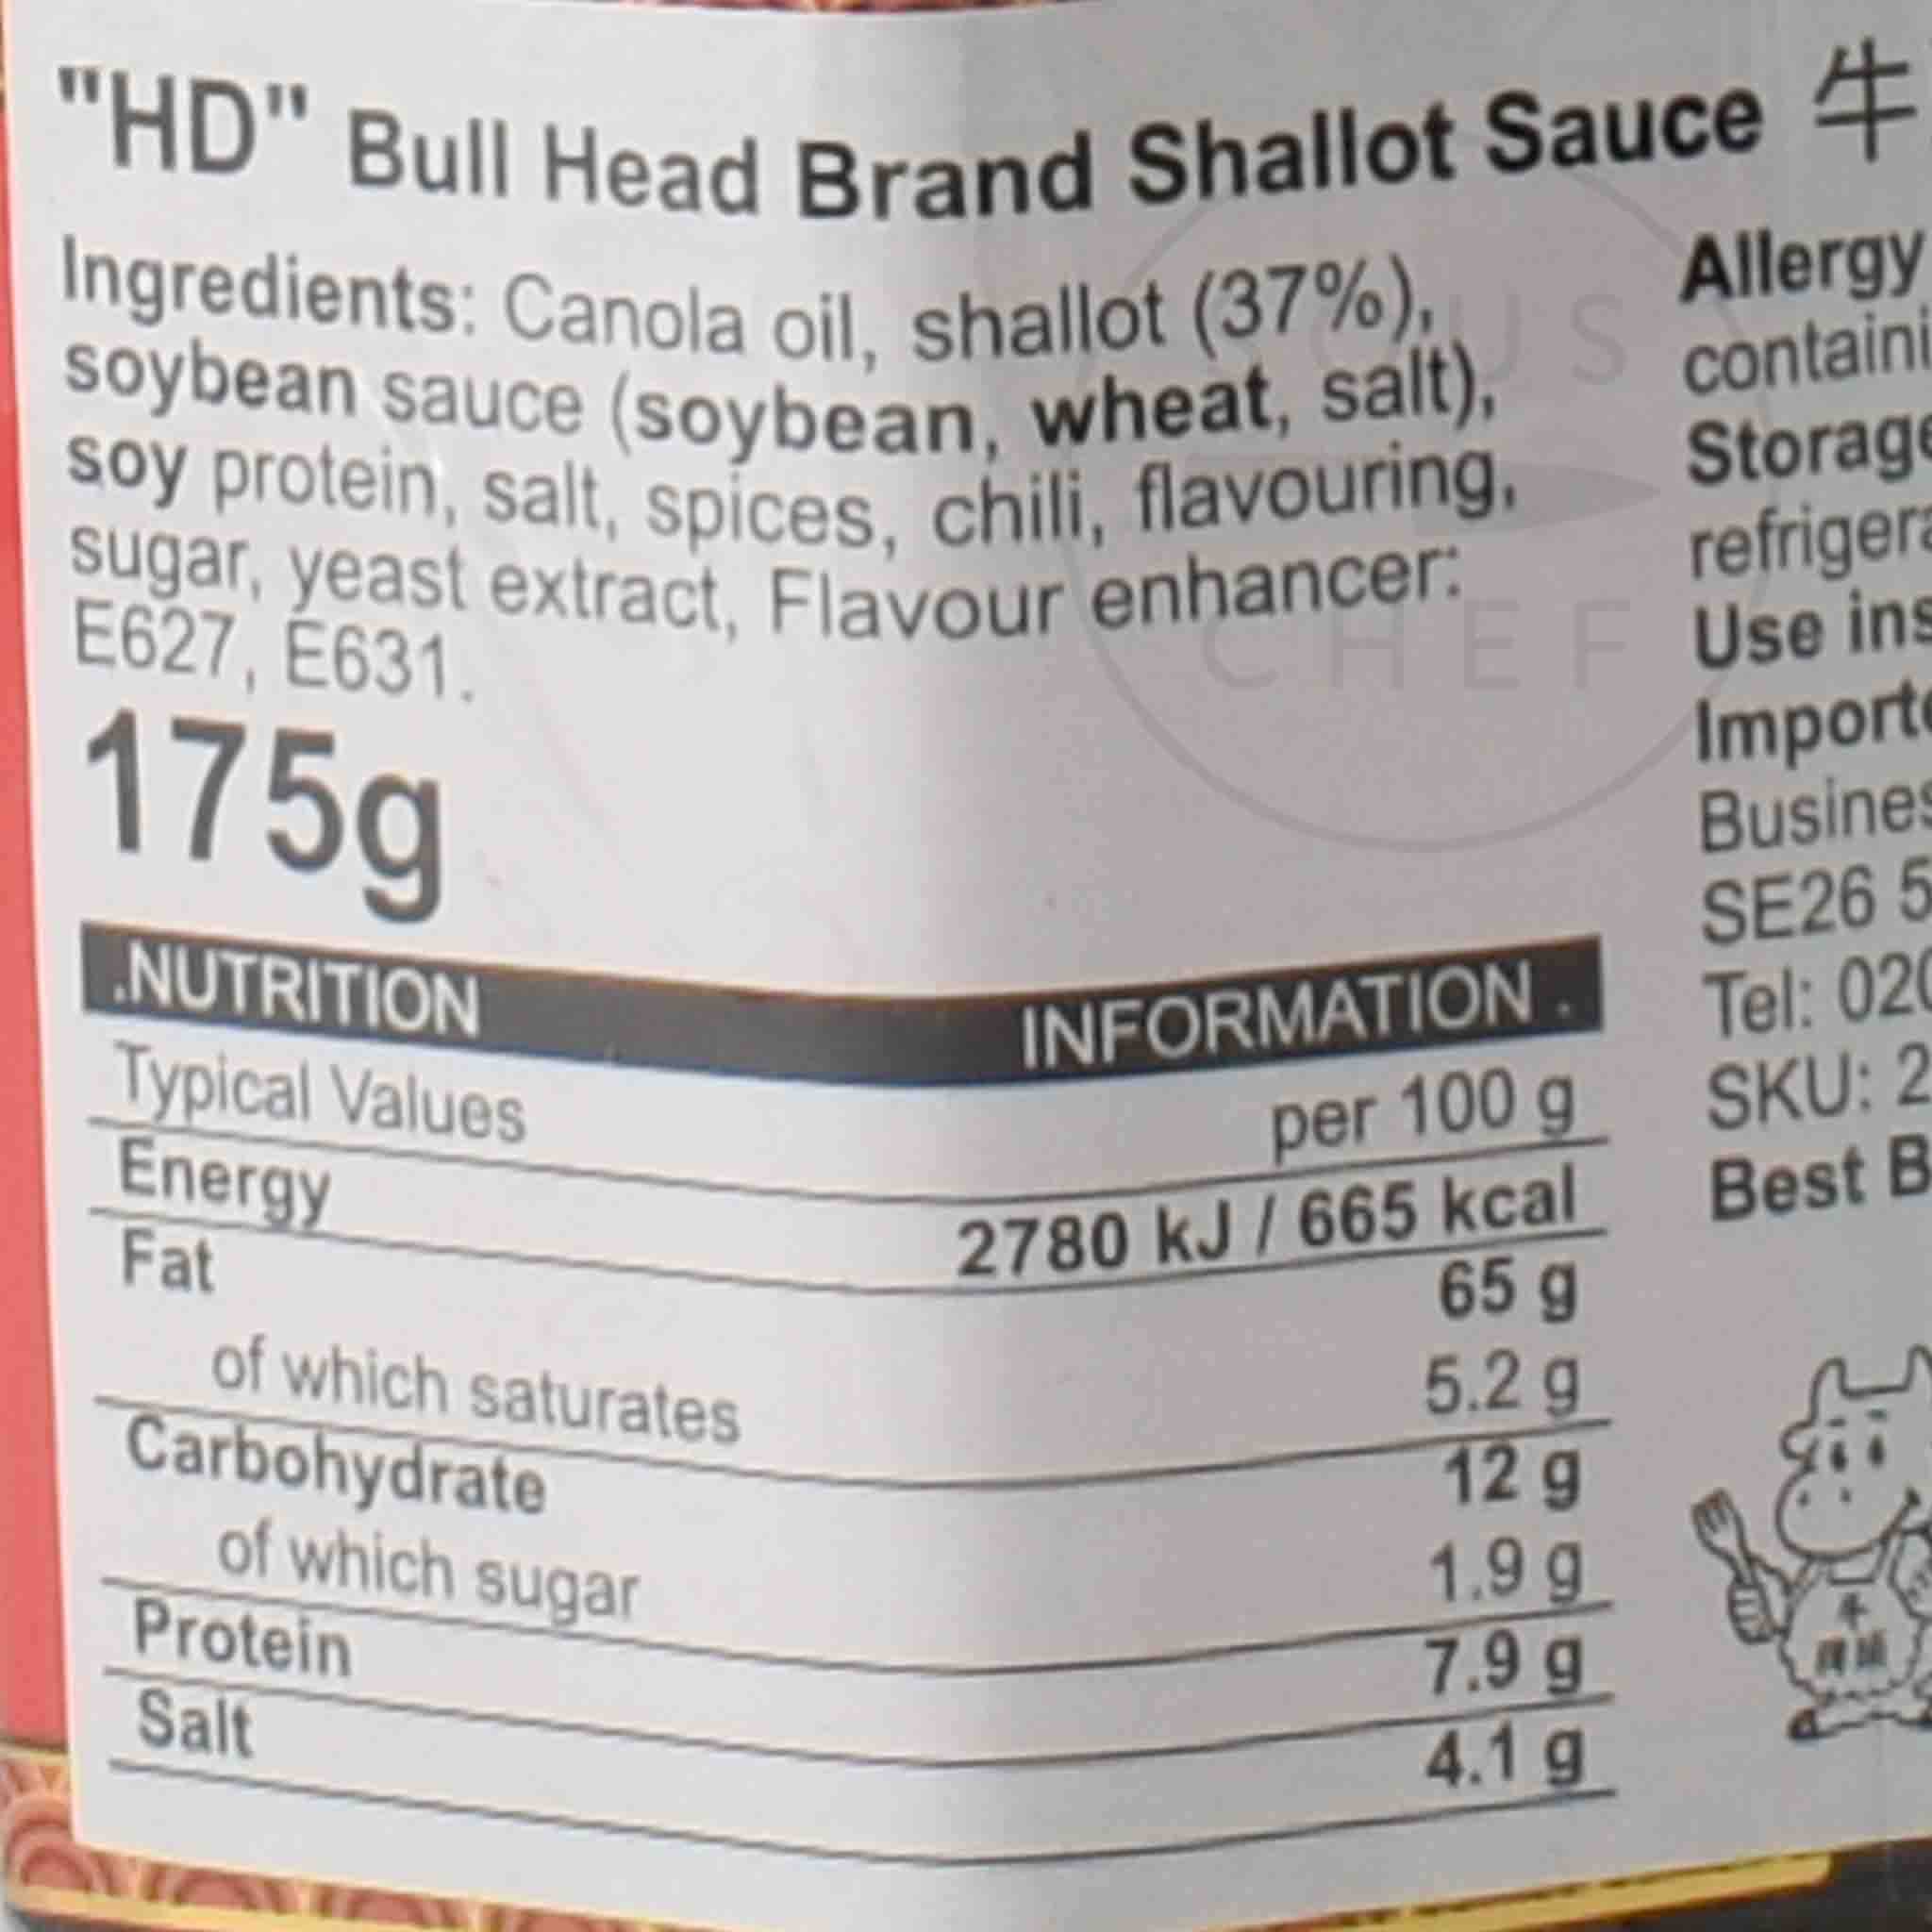 TA0027 Shallot Sauce 175g Ingredients